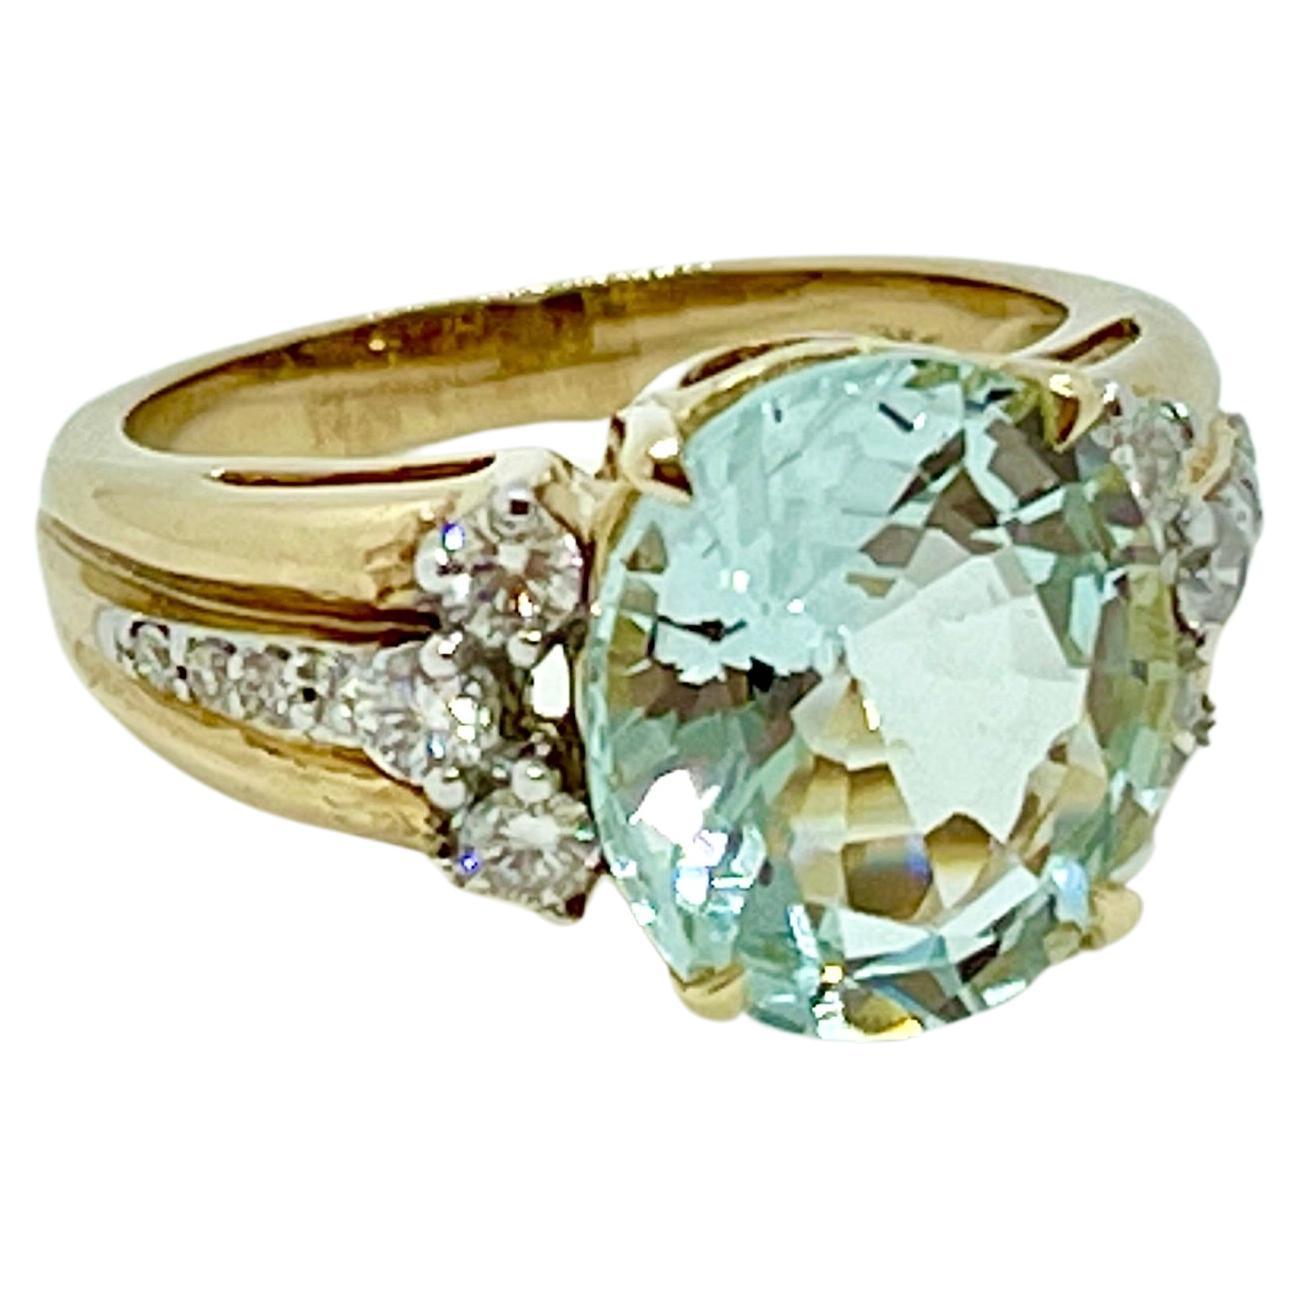 Large Oval Cut Light Blue Natural Aquamarine Diamond Ring Valuation Bargain For Sale